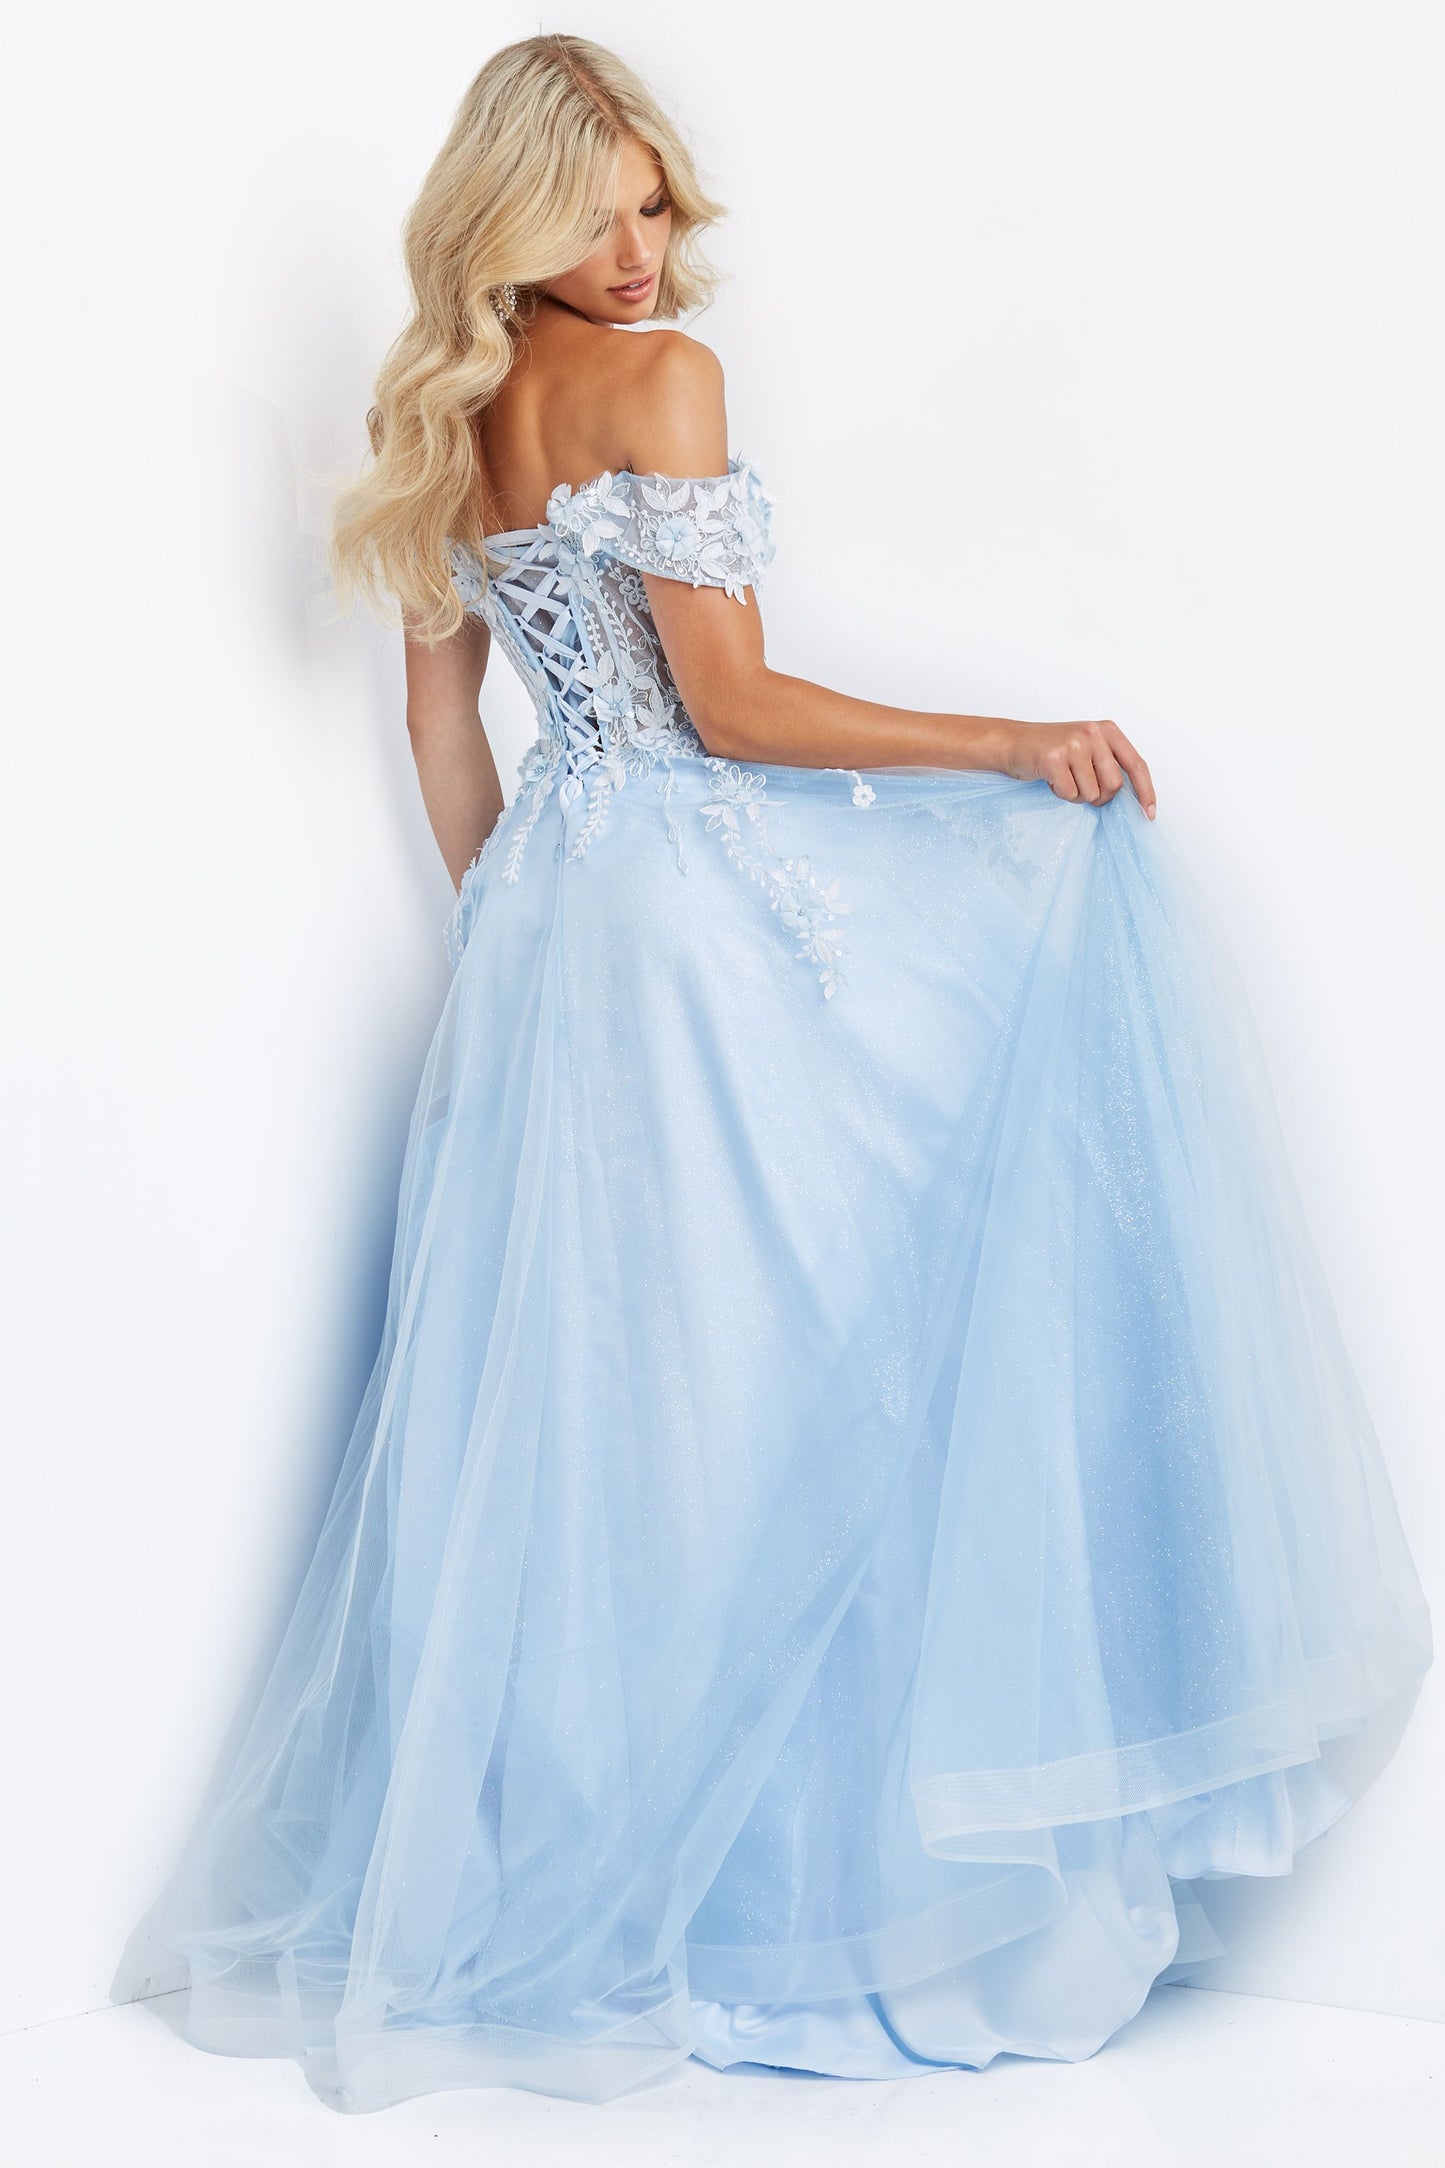 Jovani-JVN-08295-light-blue-prom-dress-back-off-the-shoulder-3D-lace-appliques-corset-sheer-bodice-glitter-ballgown-skirt